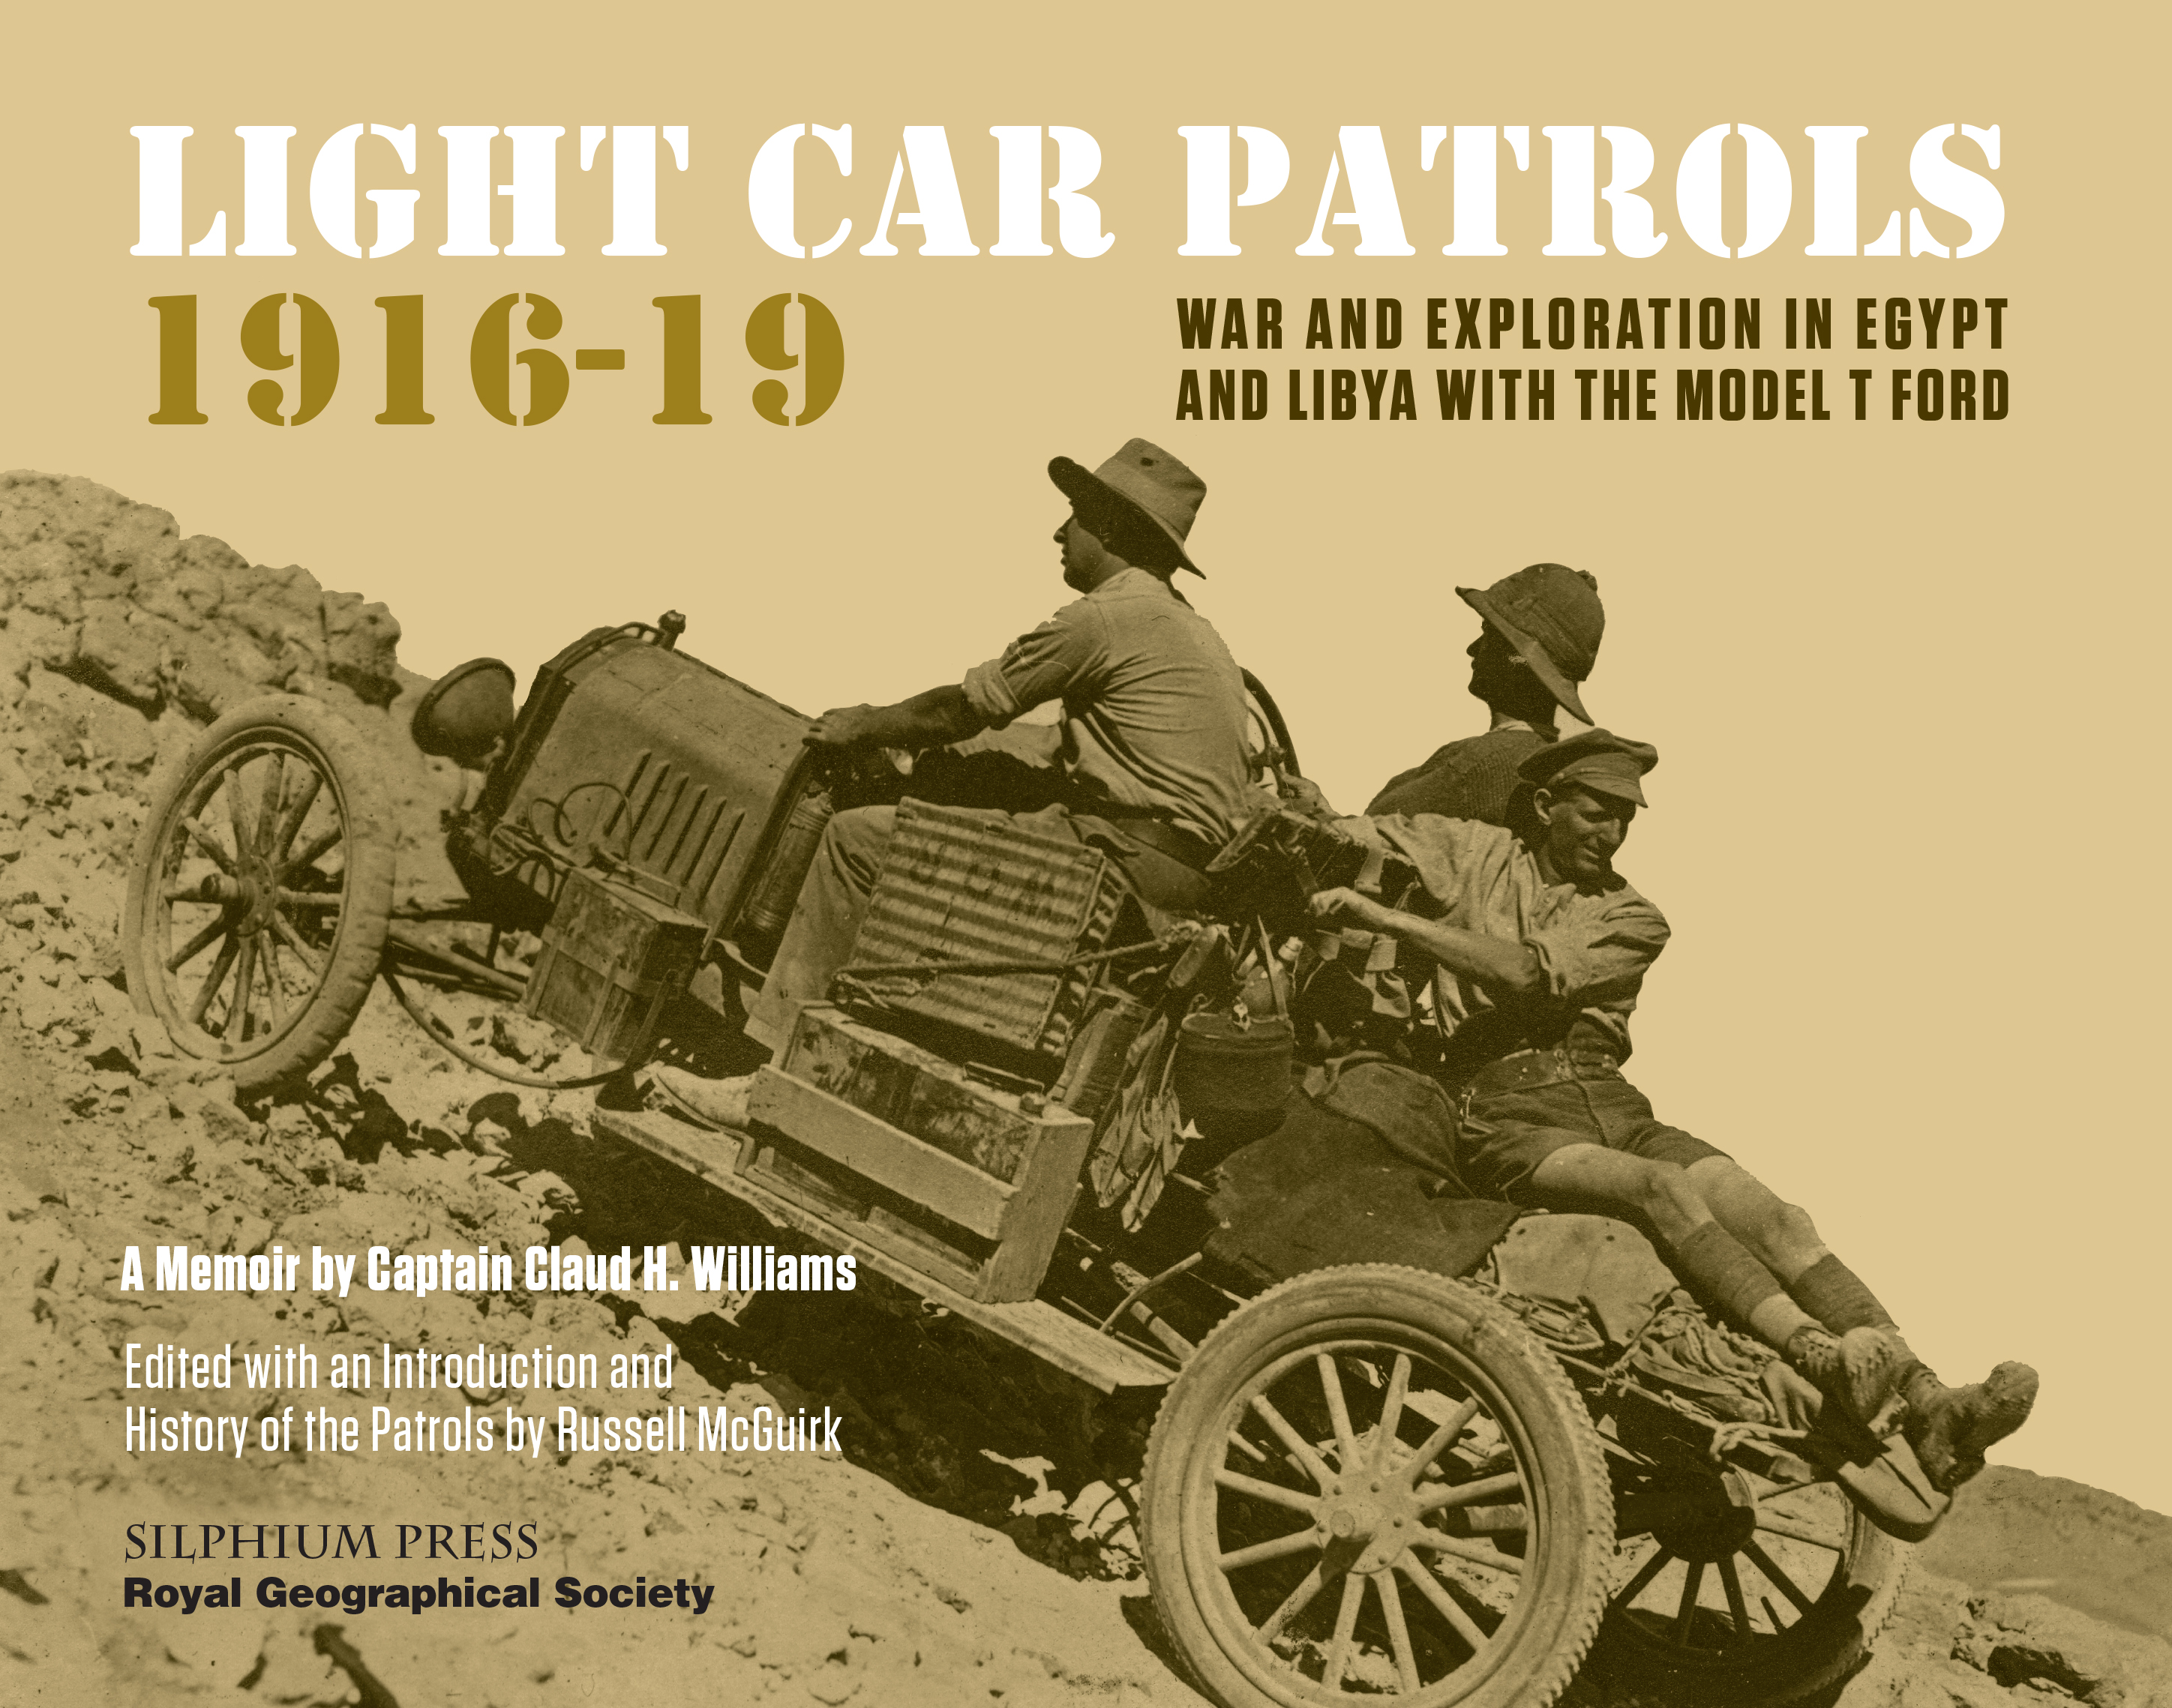 Light Car Patrols book cover